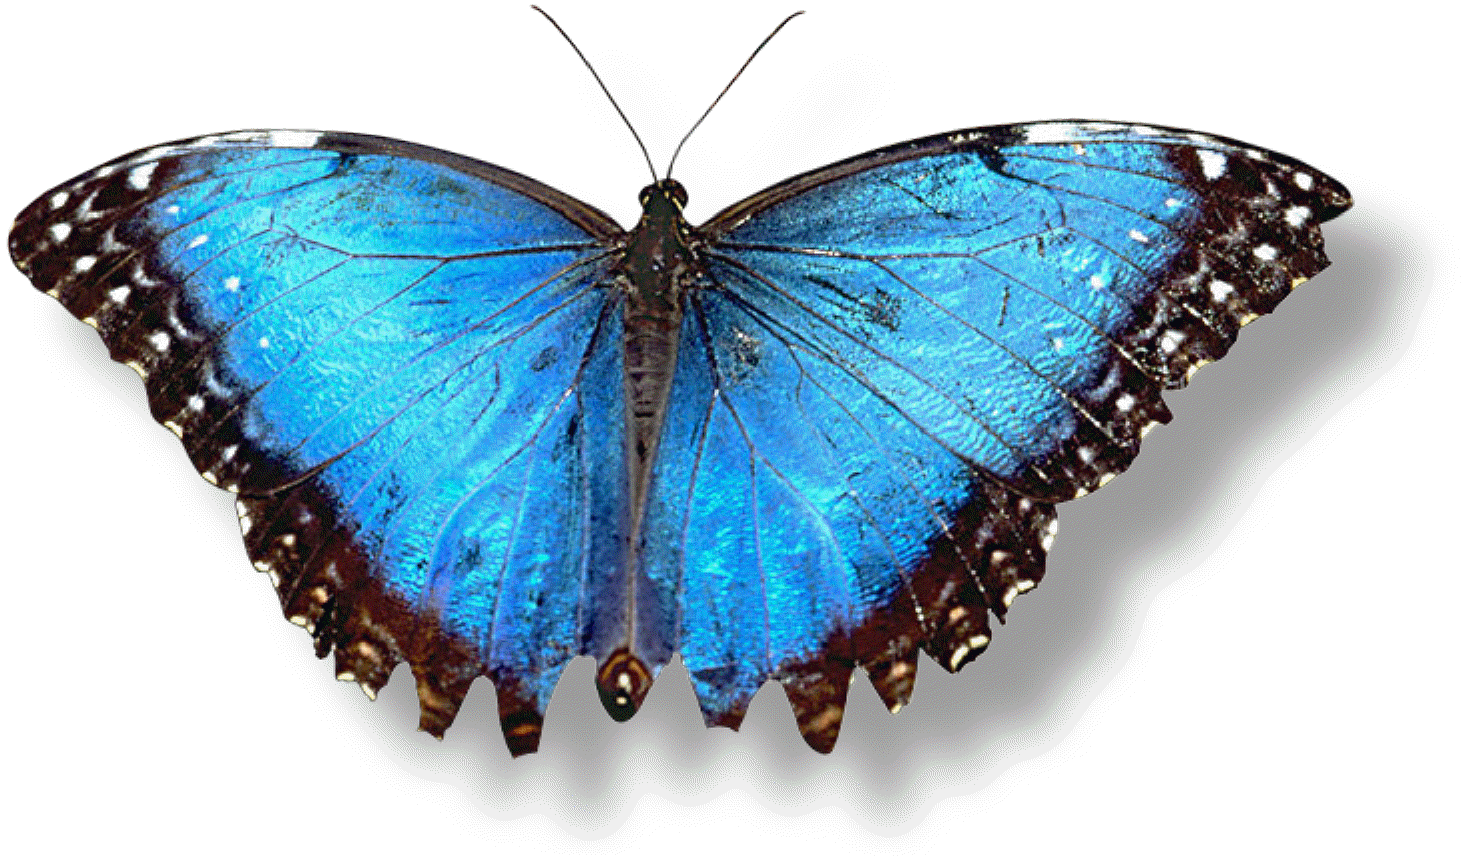 Mariposas - Butterflies | Fotos e Imágenes en FOTOBLOG X